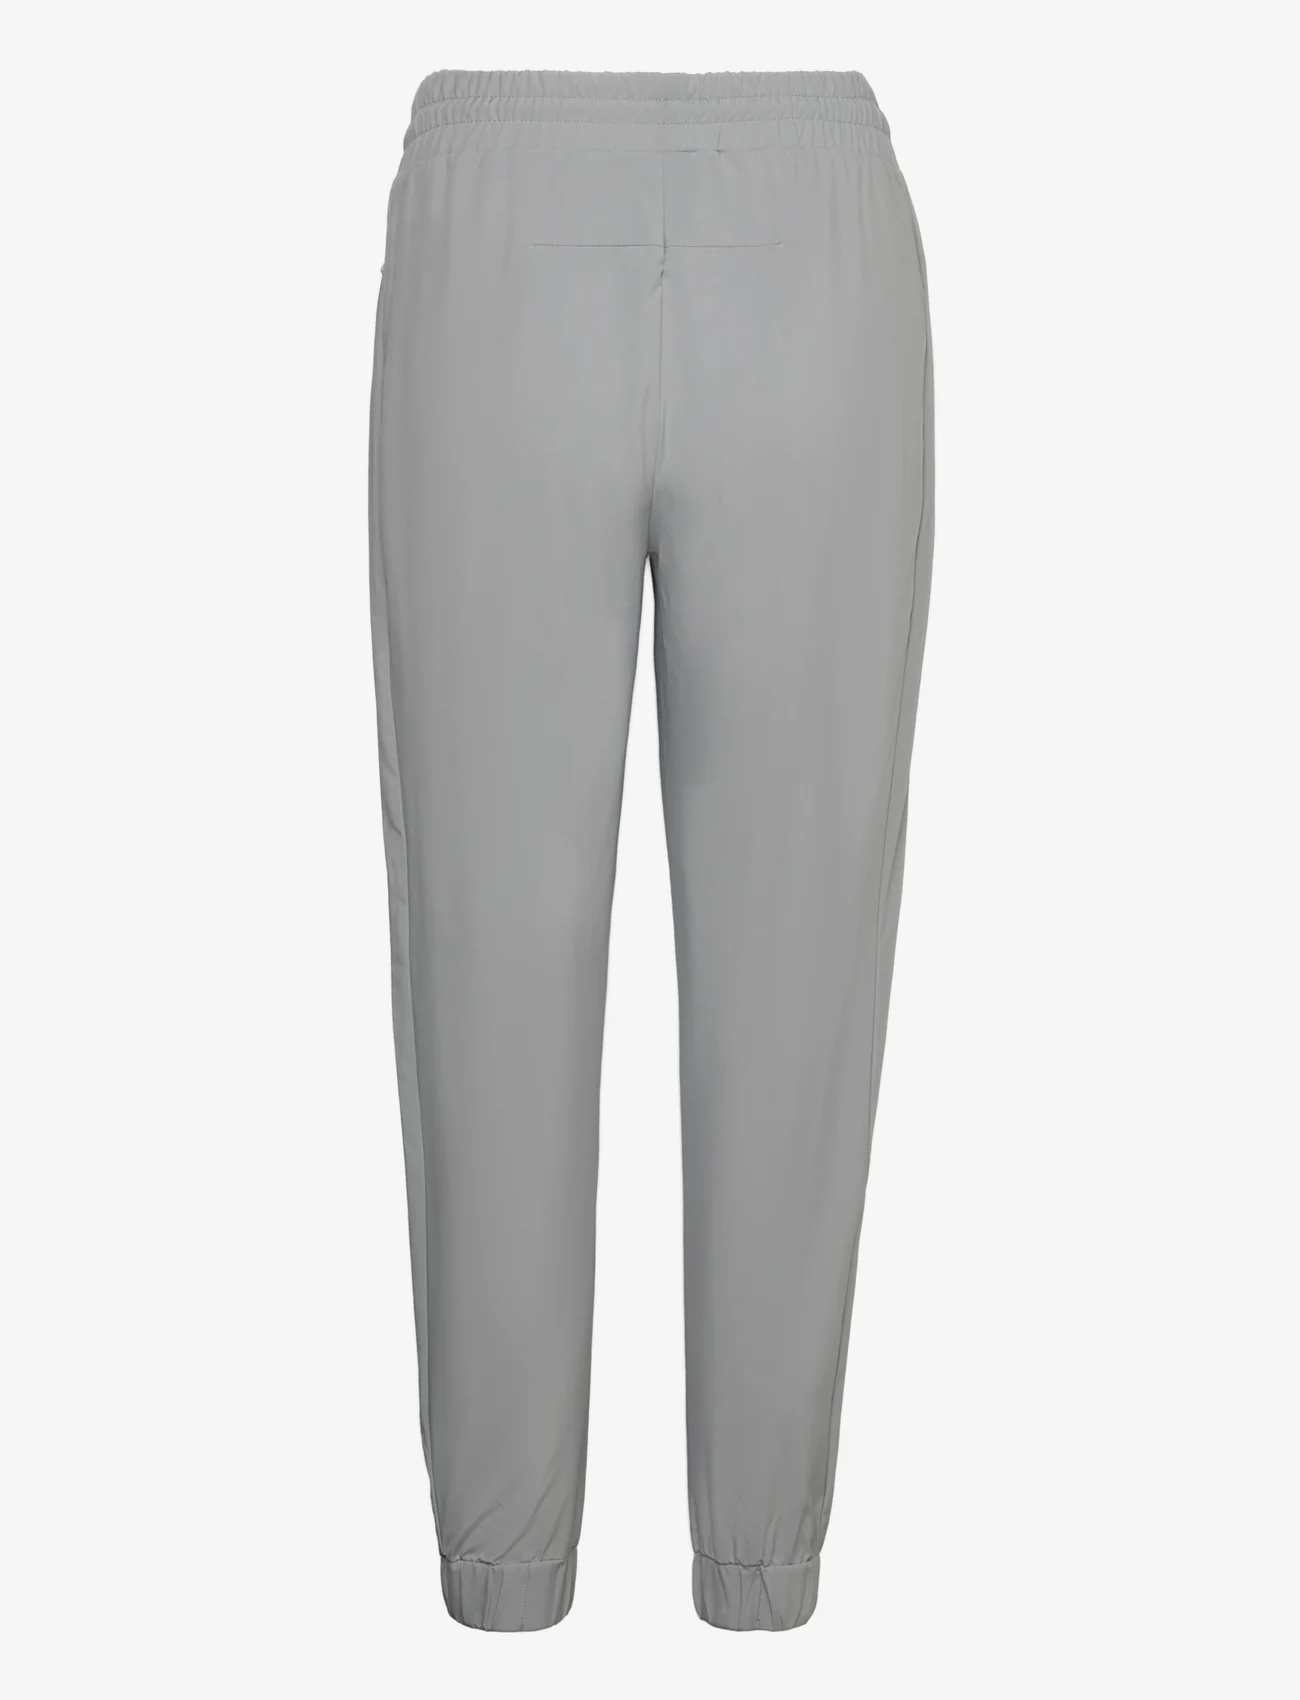 Johaug - Strut Microfiber Pant - women - light grey - 1